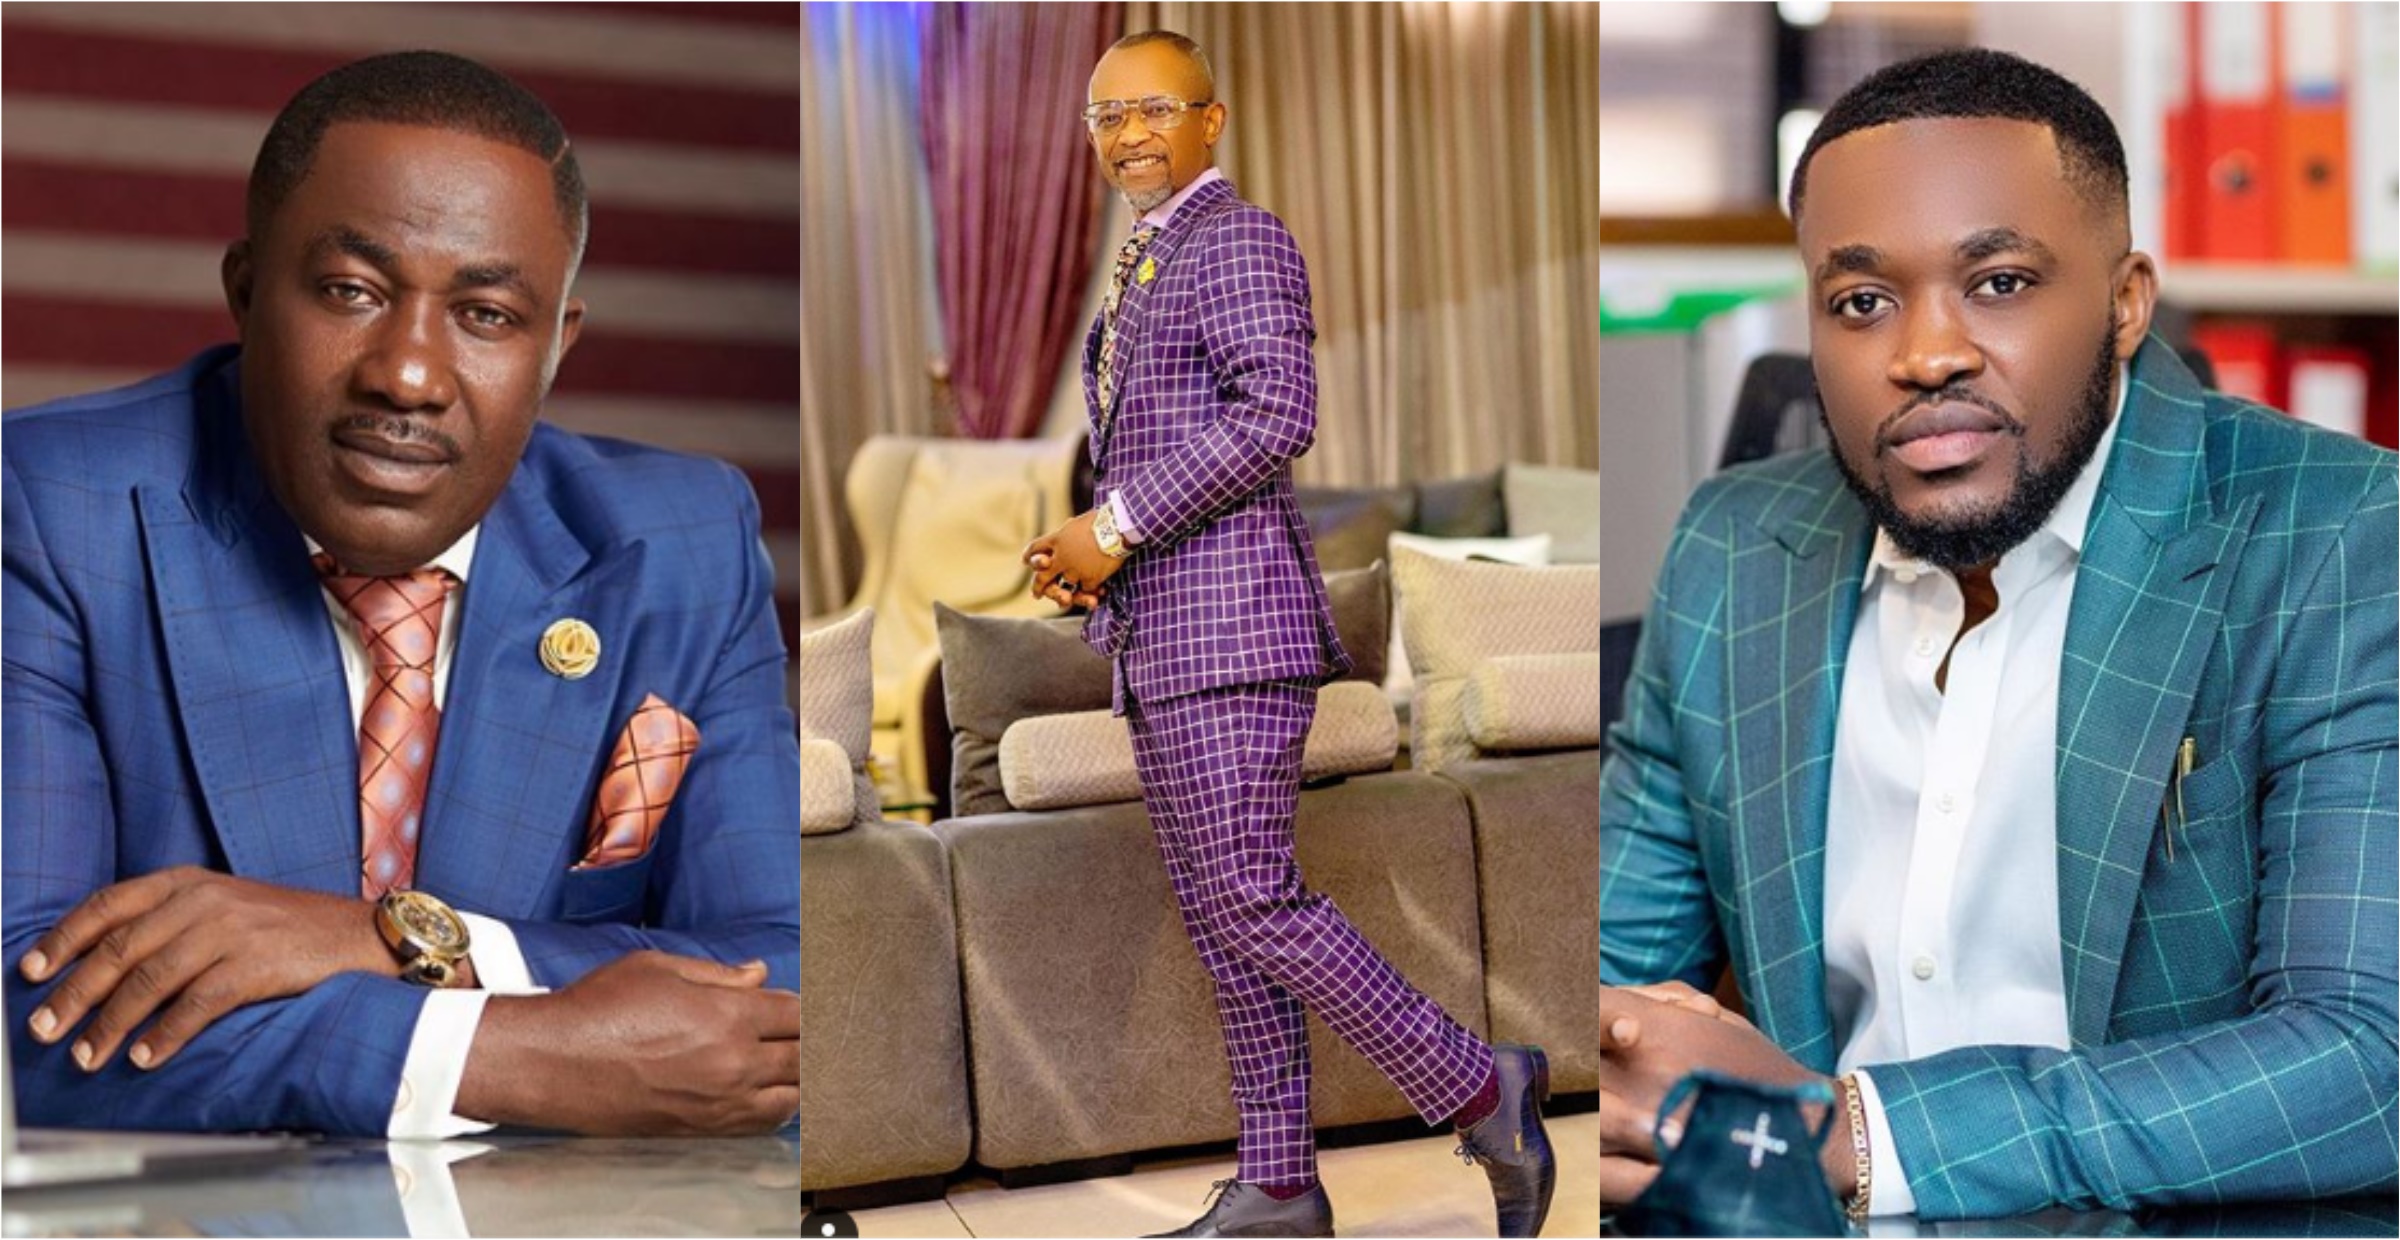 Fashion goals: Stunning photos of Despite, Ofori Sarpong, Fadda Dickson and Ken Osei in luxurious suits